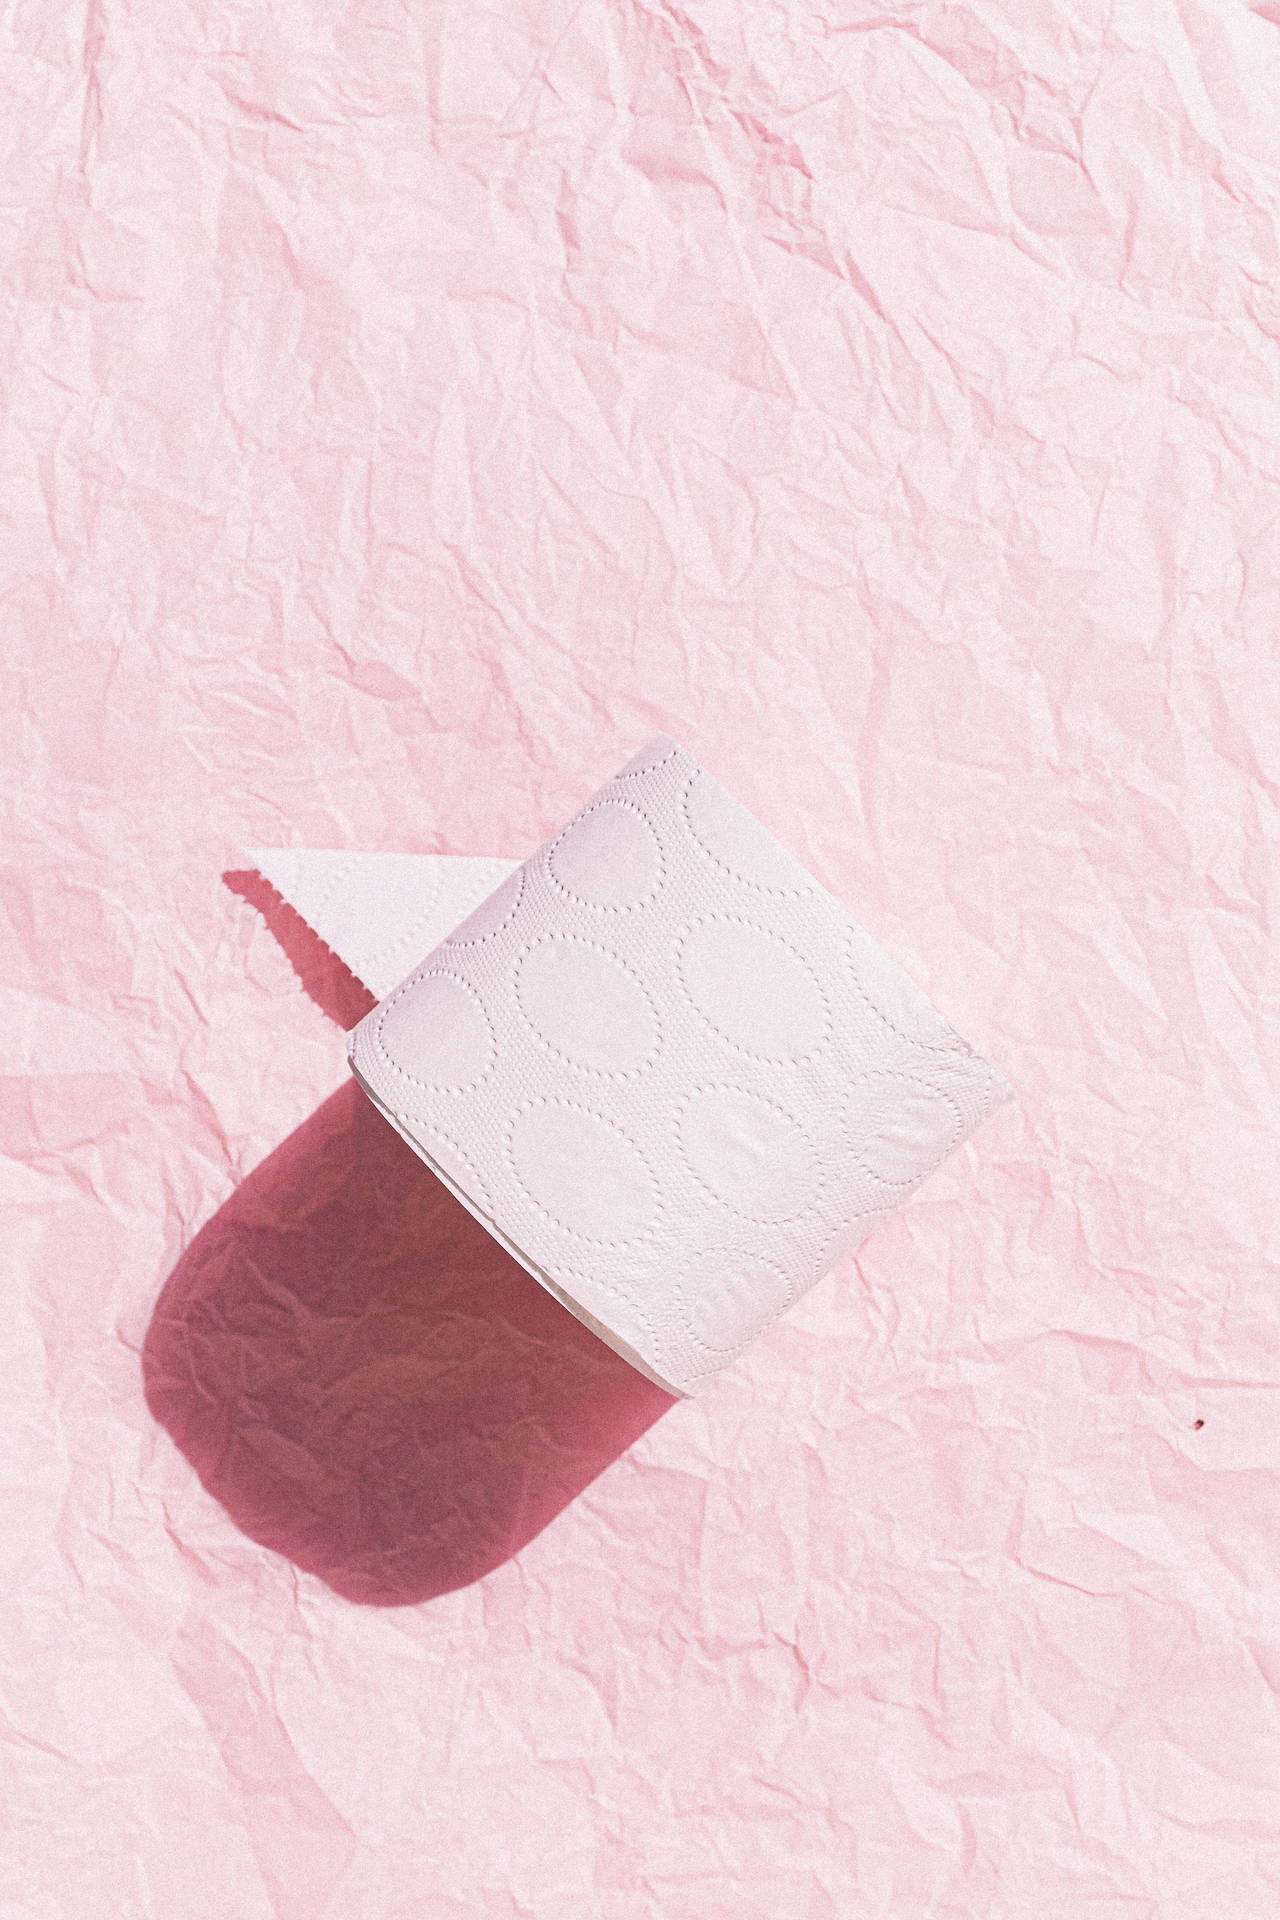 Tissue On Pink Background Background